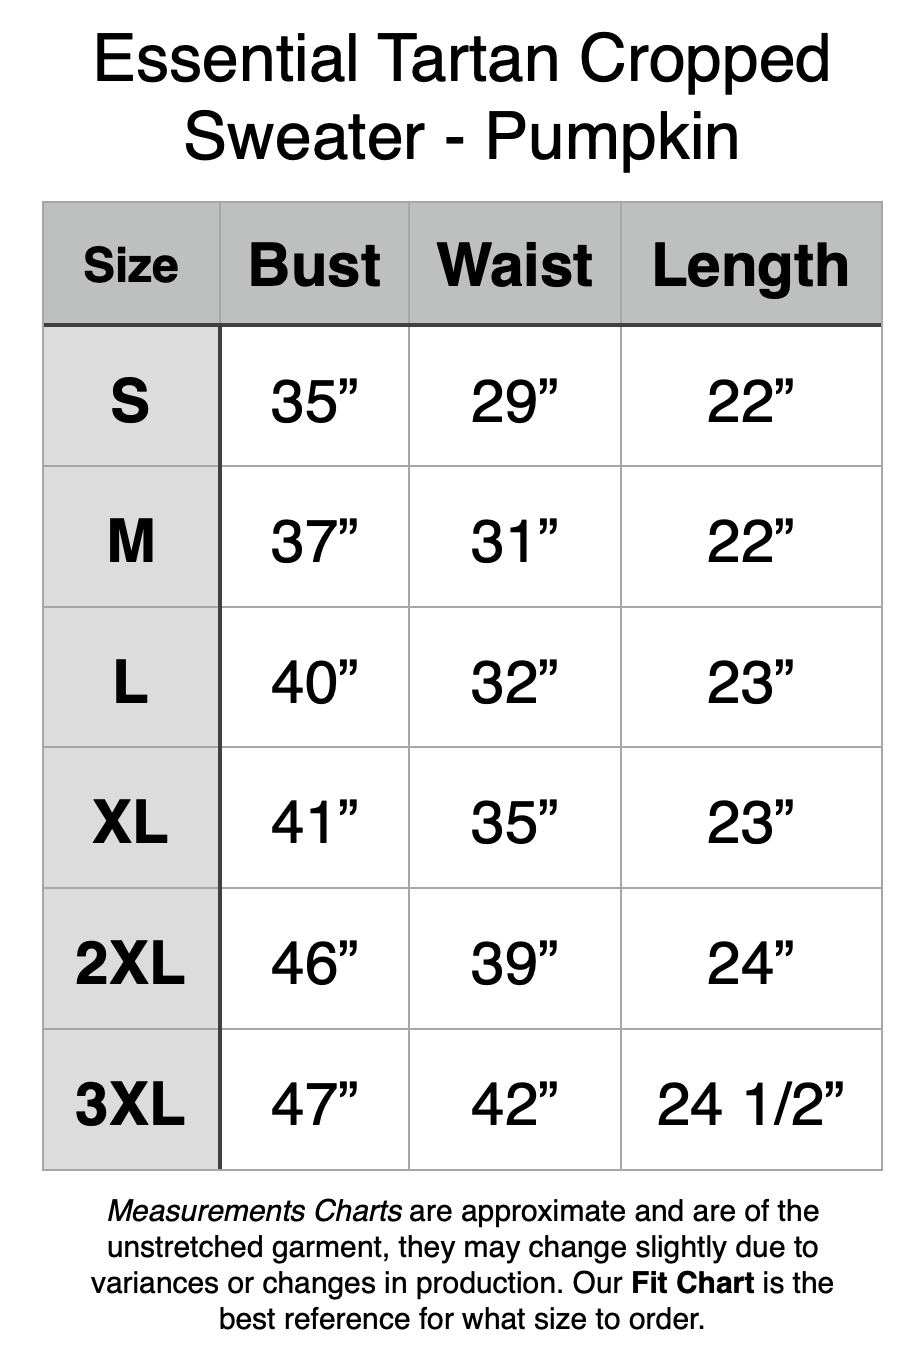 Essential Tartan Cropped Sweater - Pumpkin: S - 35" Bust, 29" Waist, 22" Length. M - 37" Bust, 31" Waist, 22" Length. L - 40" Bust, 32" Waist, 23" Length. XL - 41" Bust, 35" Waist, 23" Length. 2XL - 46" Bust, 39" Waist, 24" Length. 3XL - 47" Bust, 42" Waist, 24.5" Length.